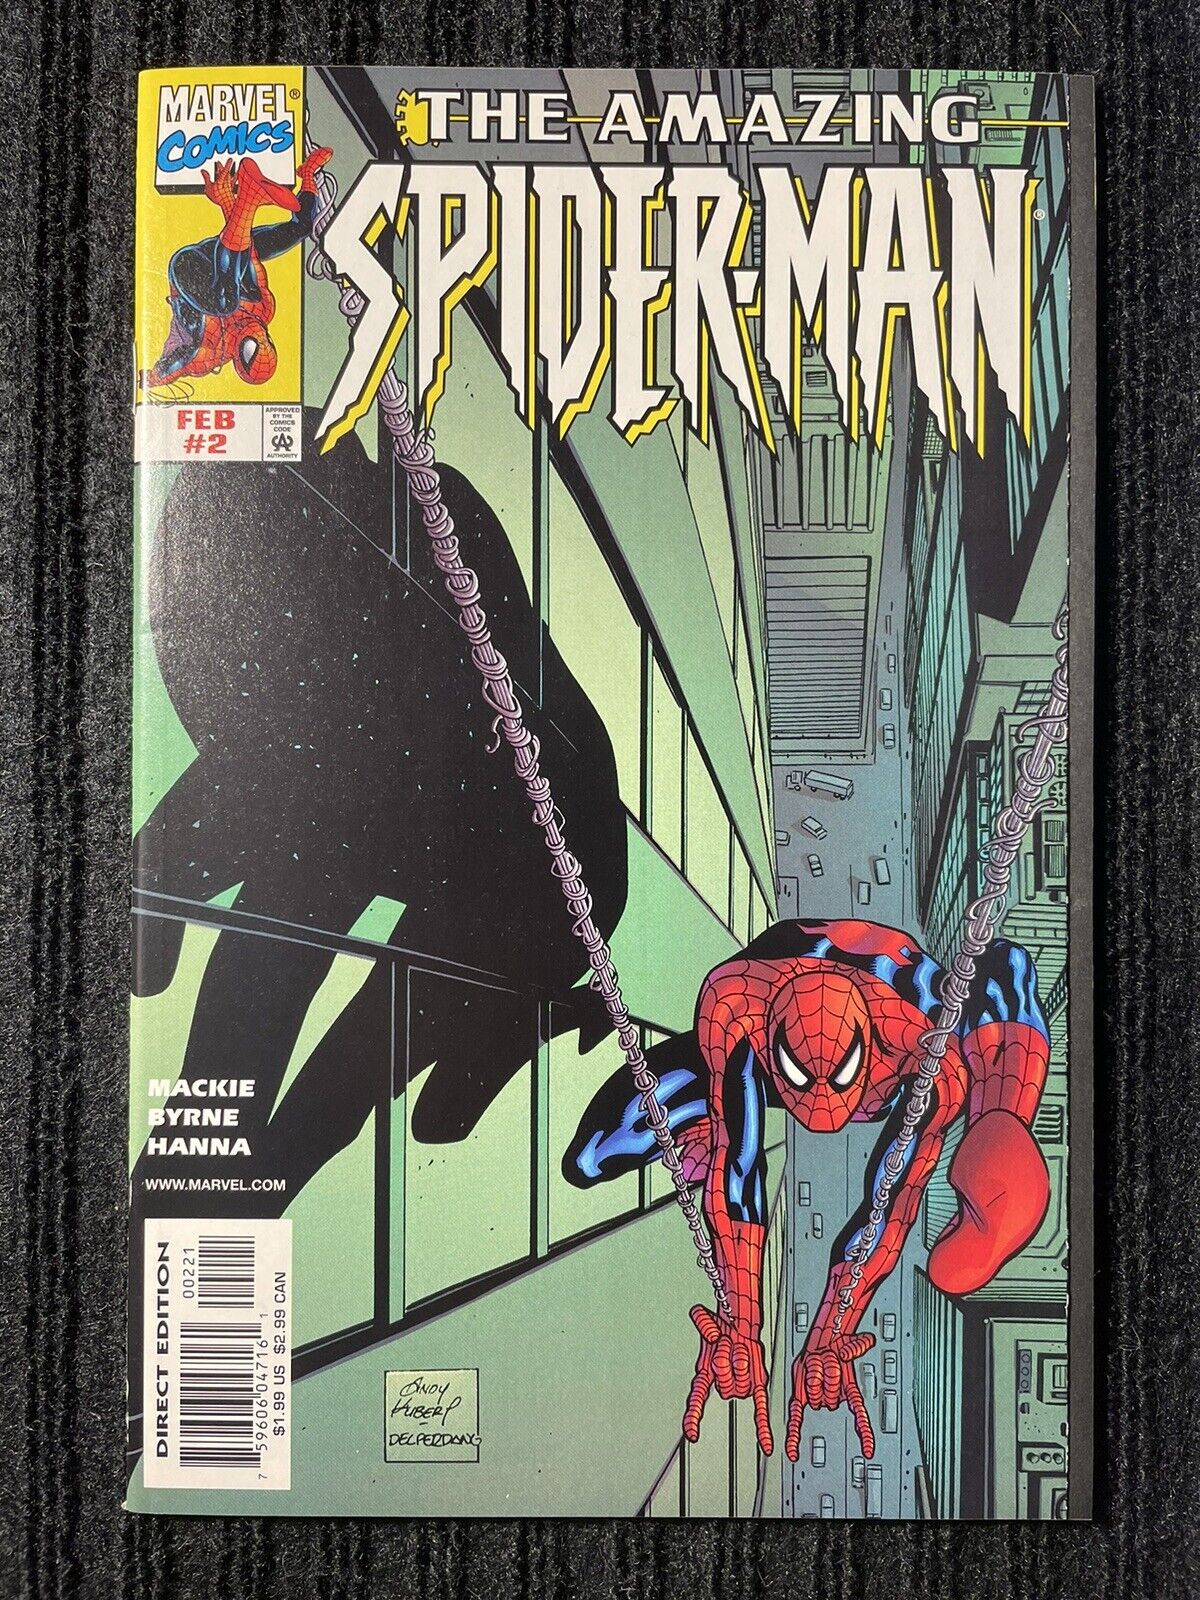 The Amazing Spider-Man #2 ( ASM #443) John Byrne Variant 1999